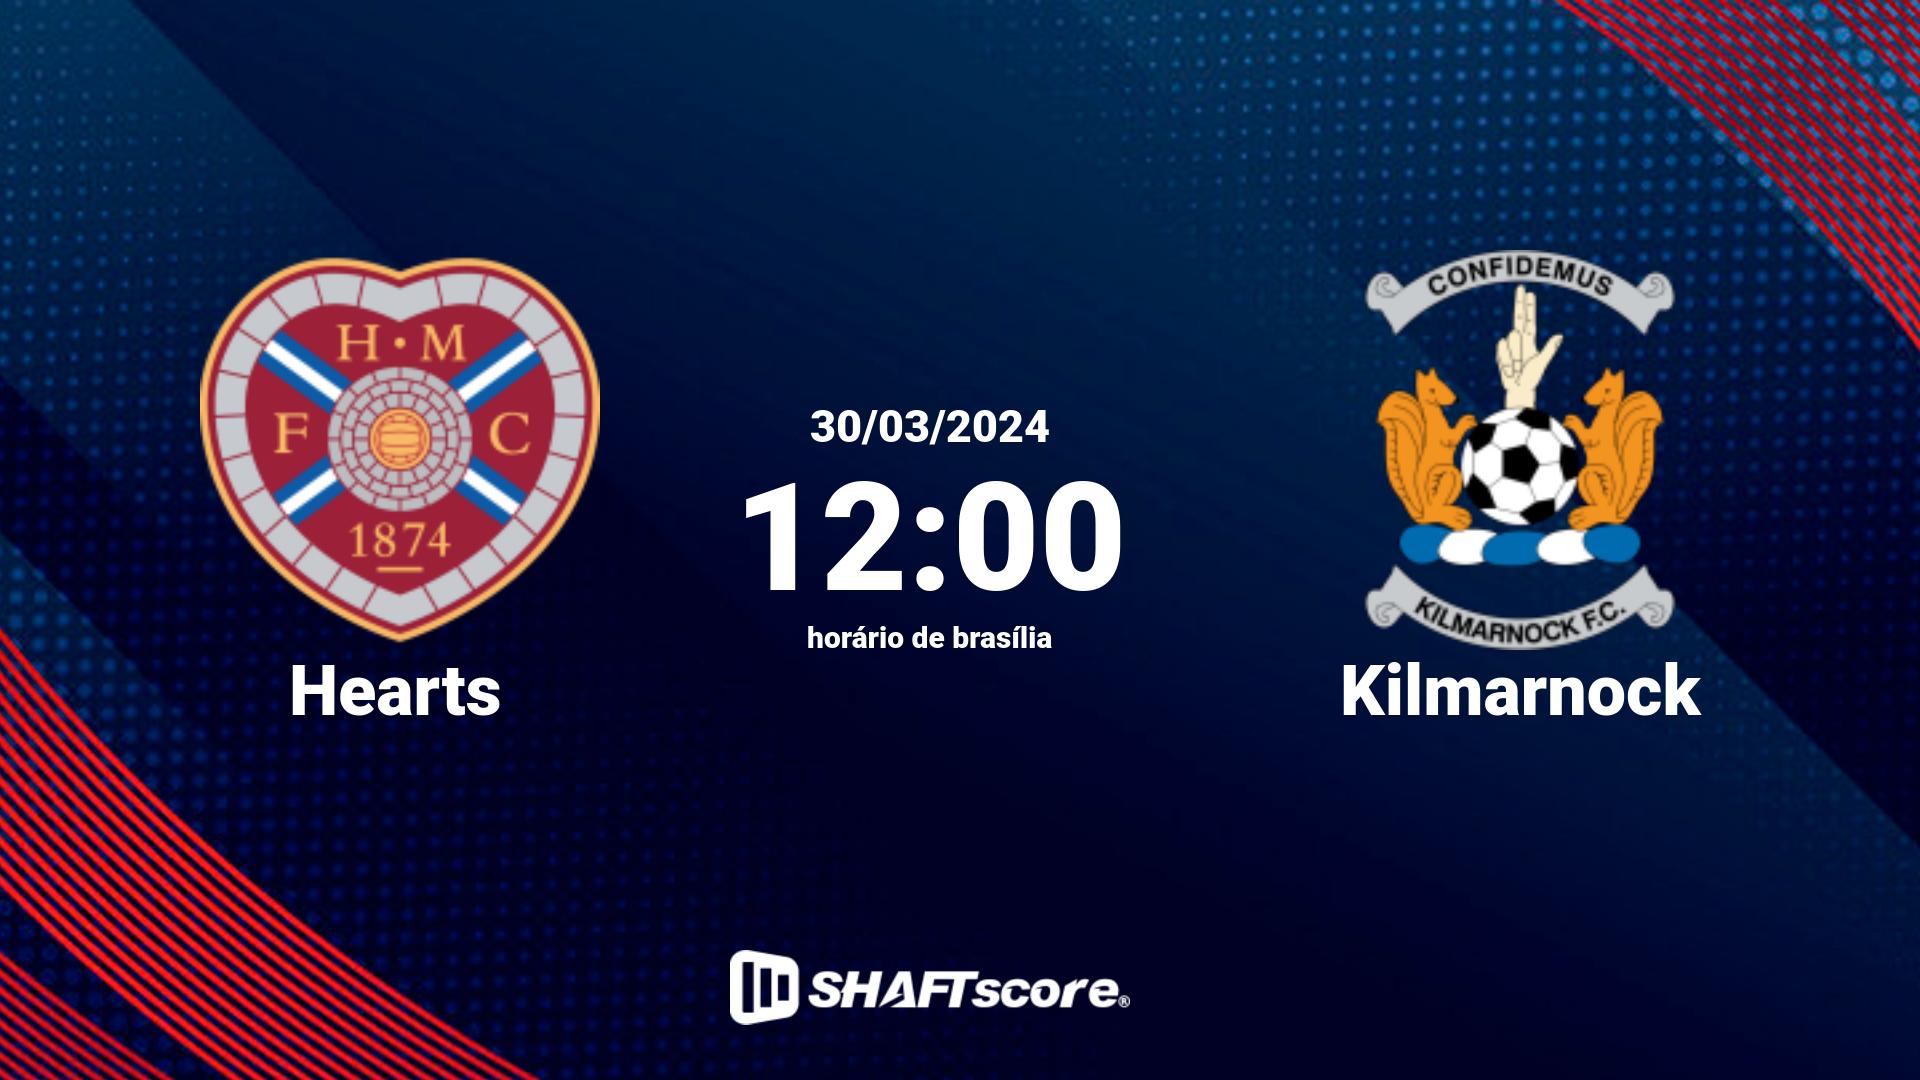 Estatísticas do jogo Hearts vs Kilmarnock 30.03 12:00